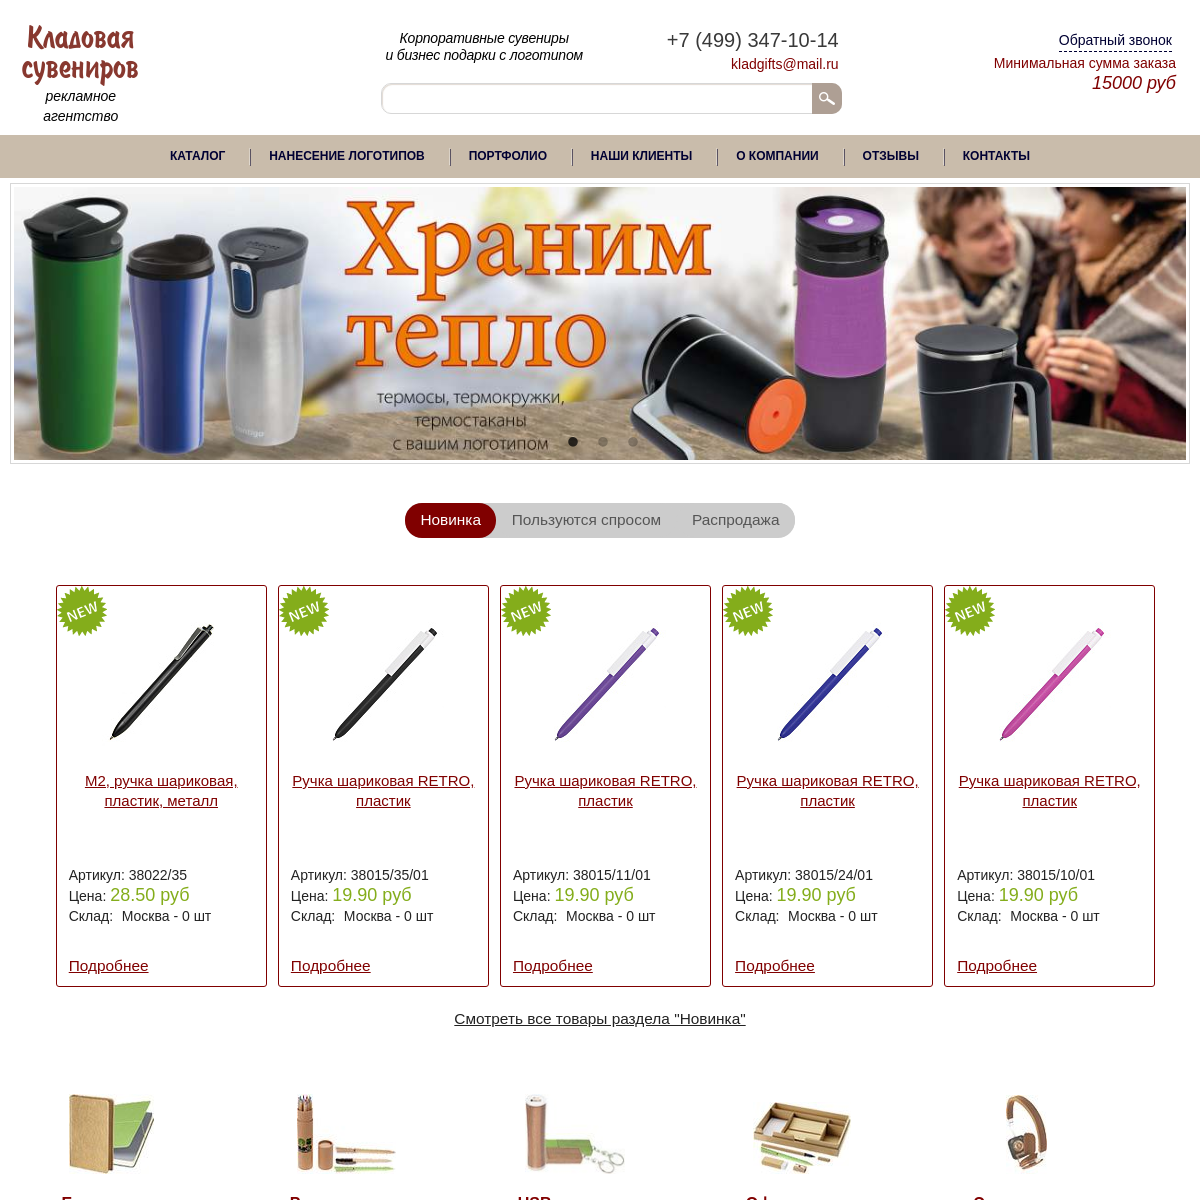 A complete backup of kladgifts.ru